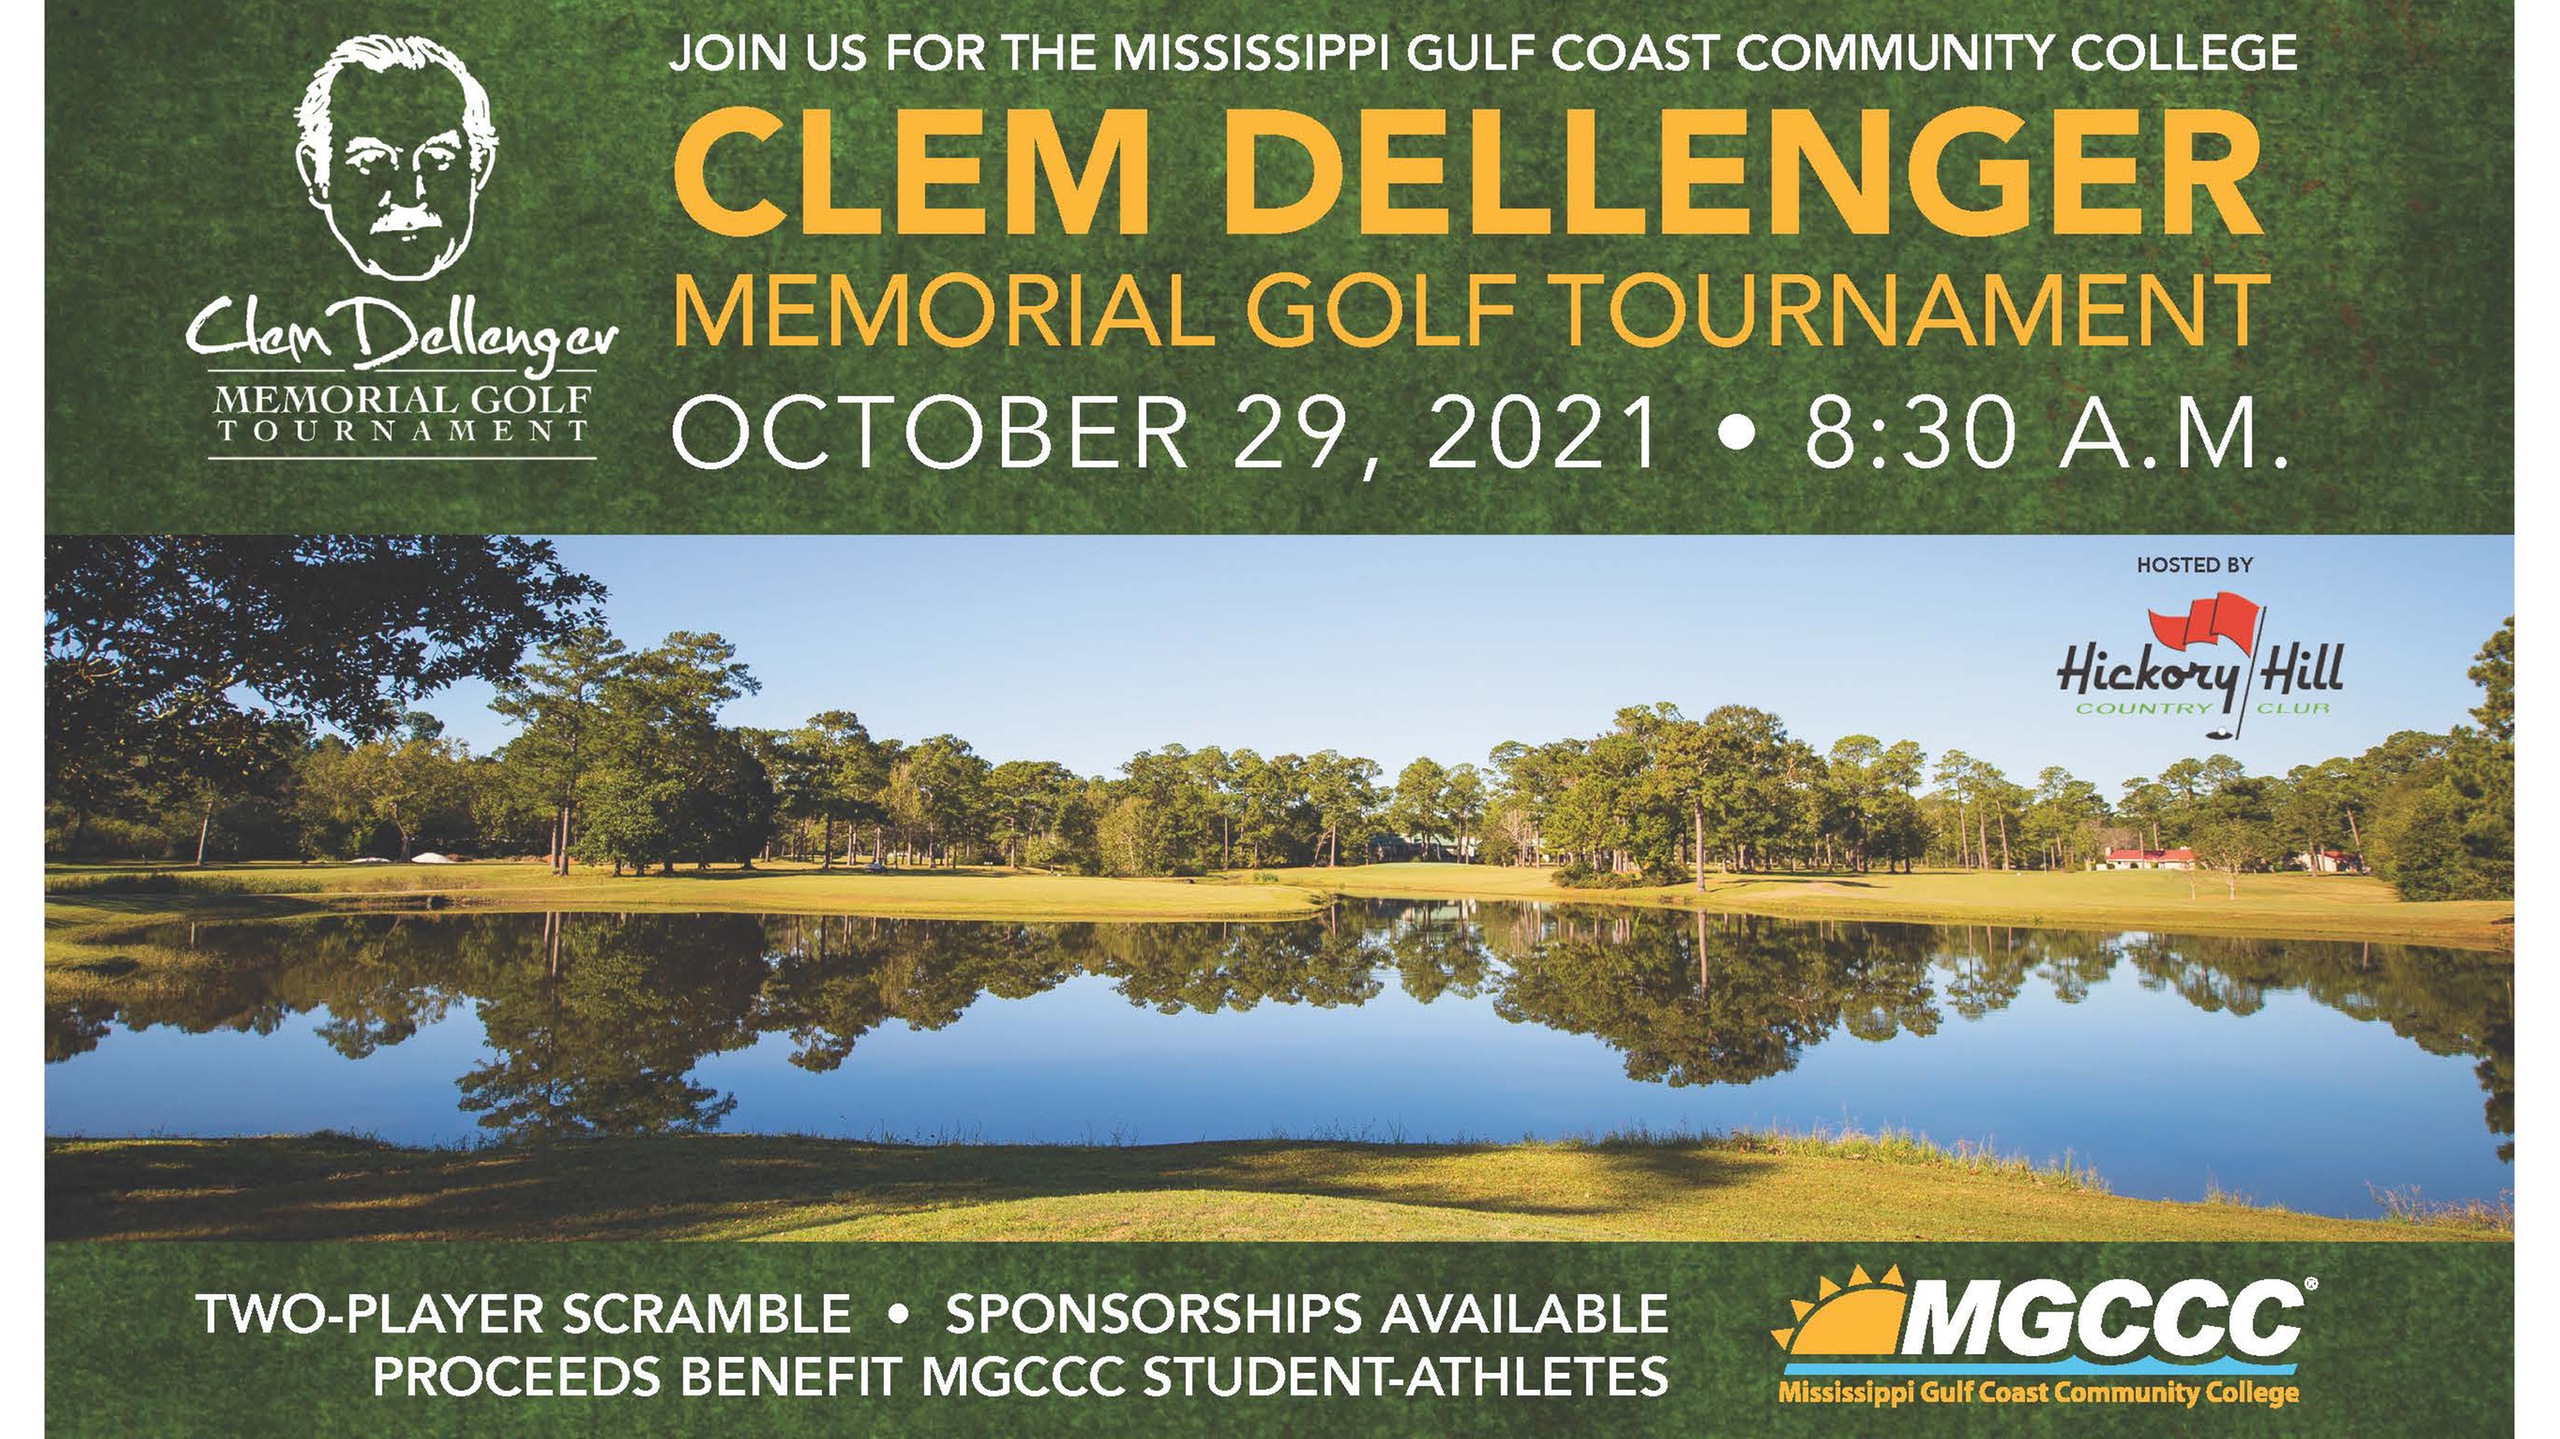 Clem Dellenger Tournament is back